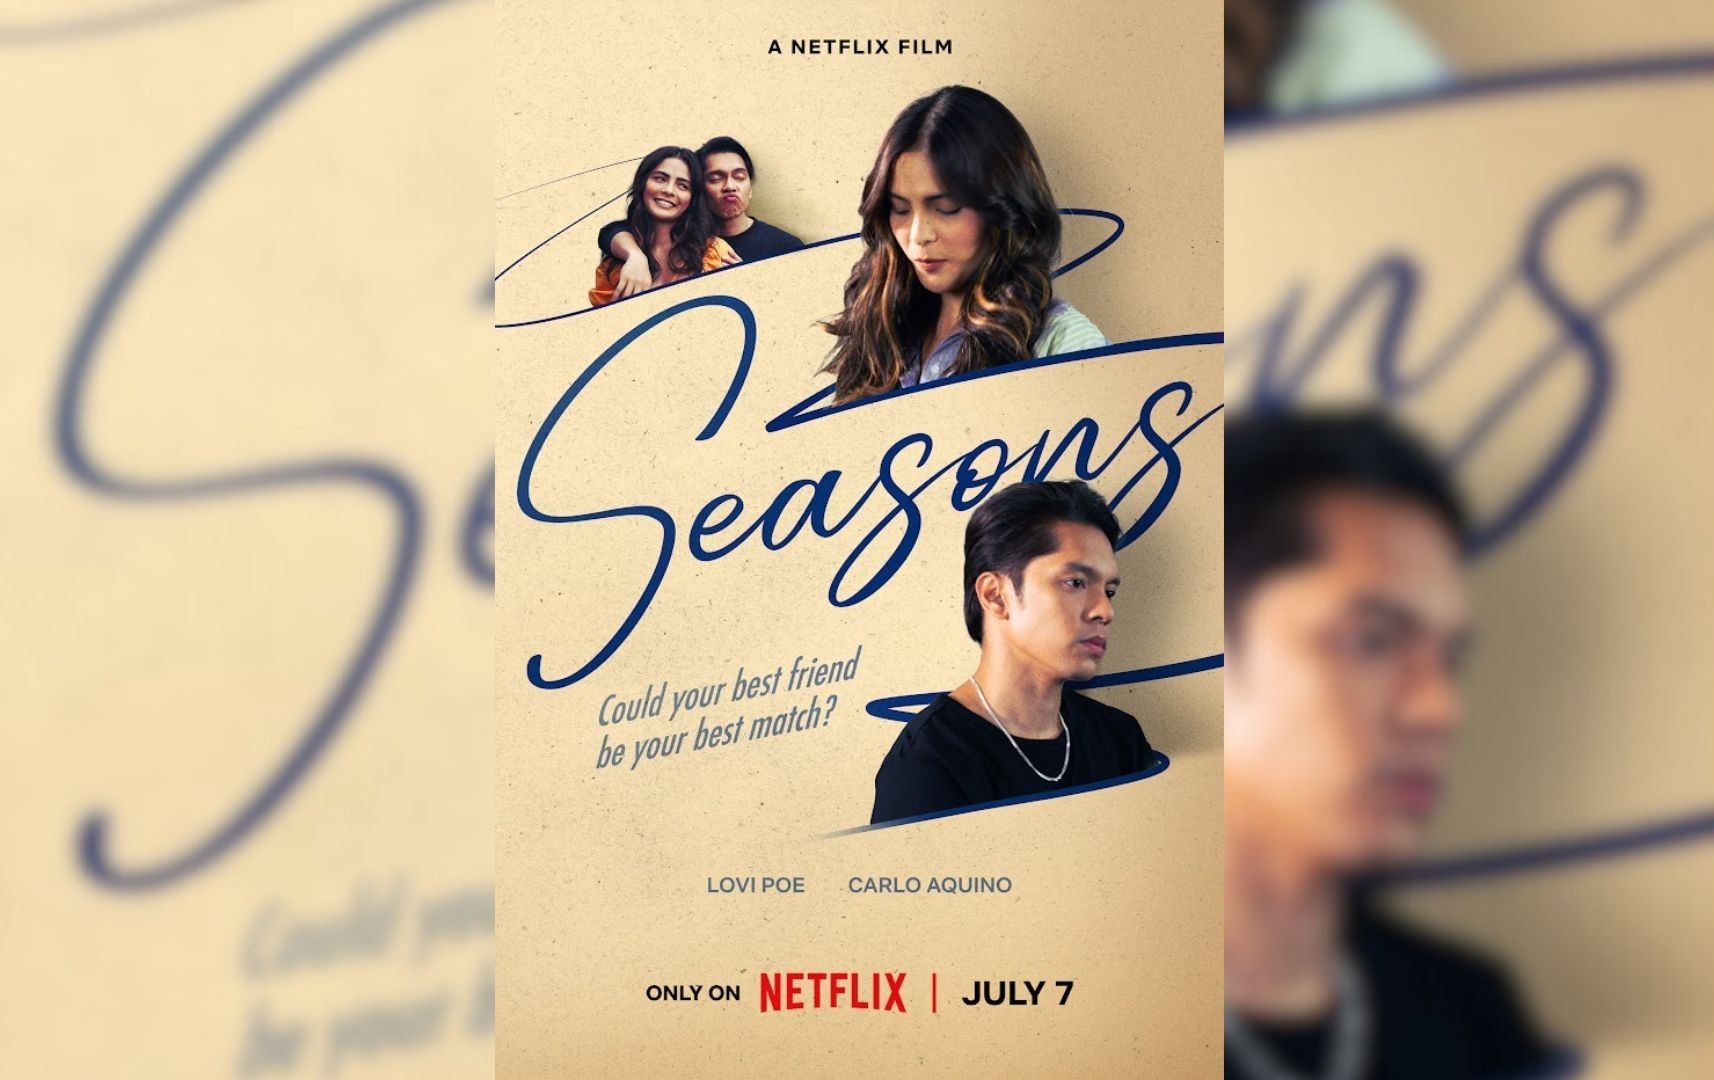 'Seasons' starring Lovi Poe, Carlo Aquino premiering on Netflix July 7